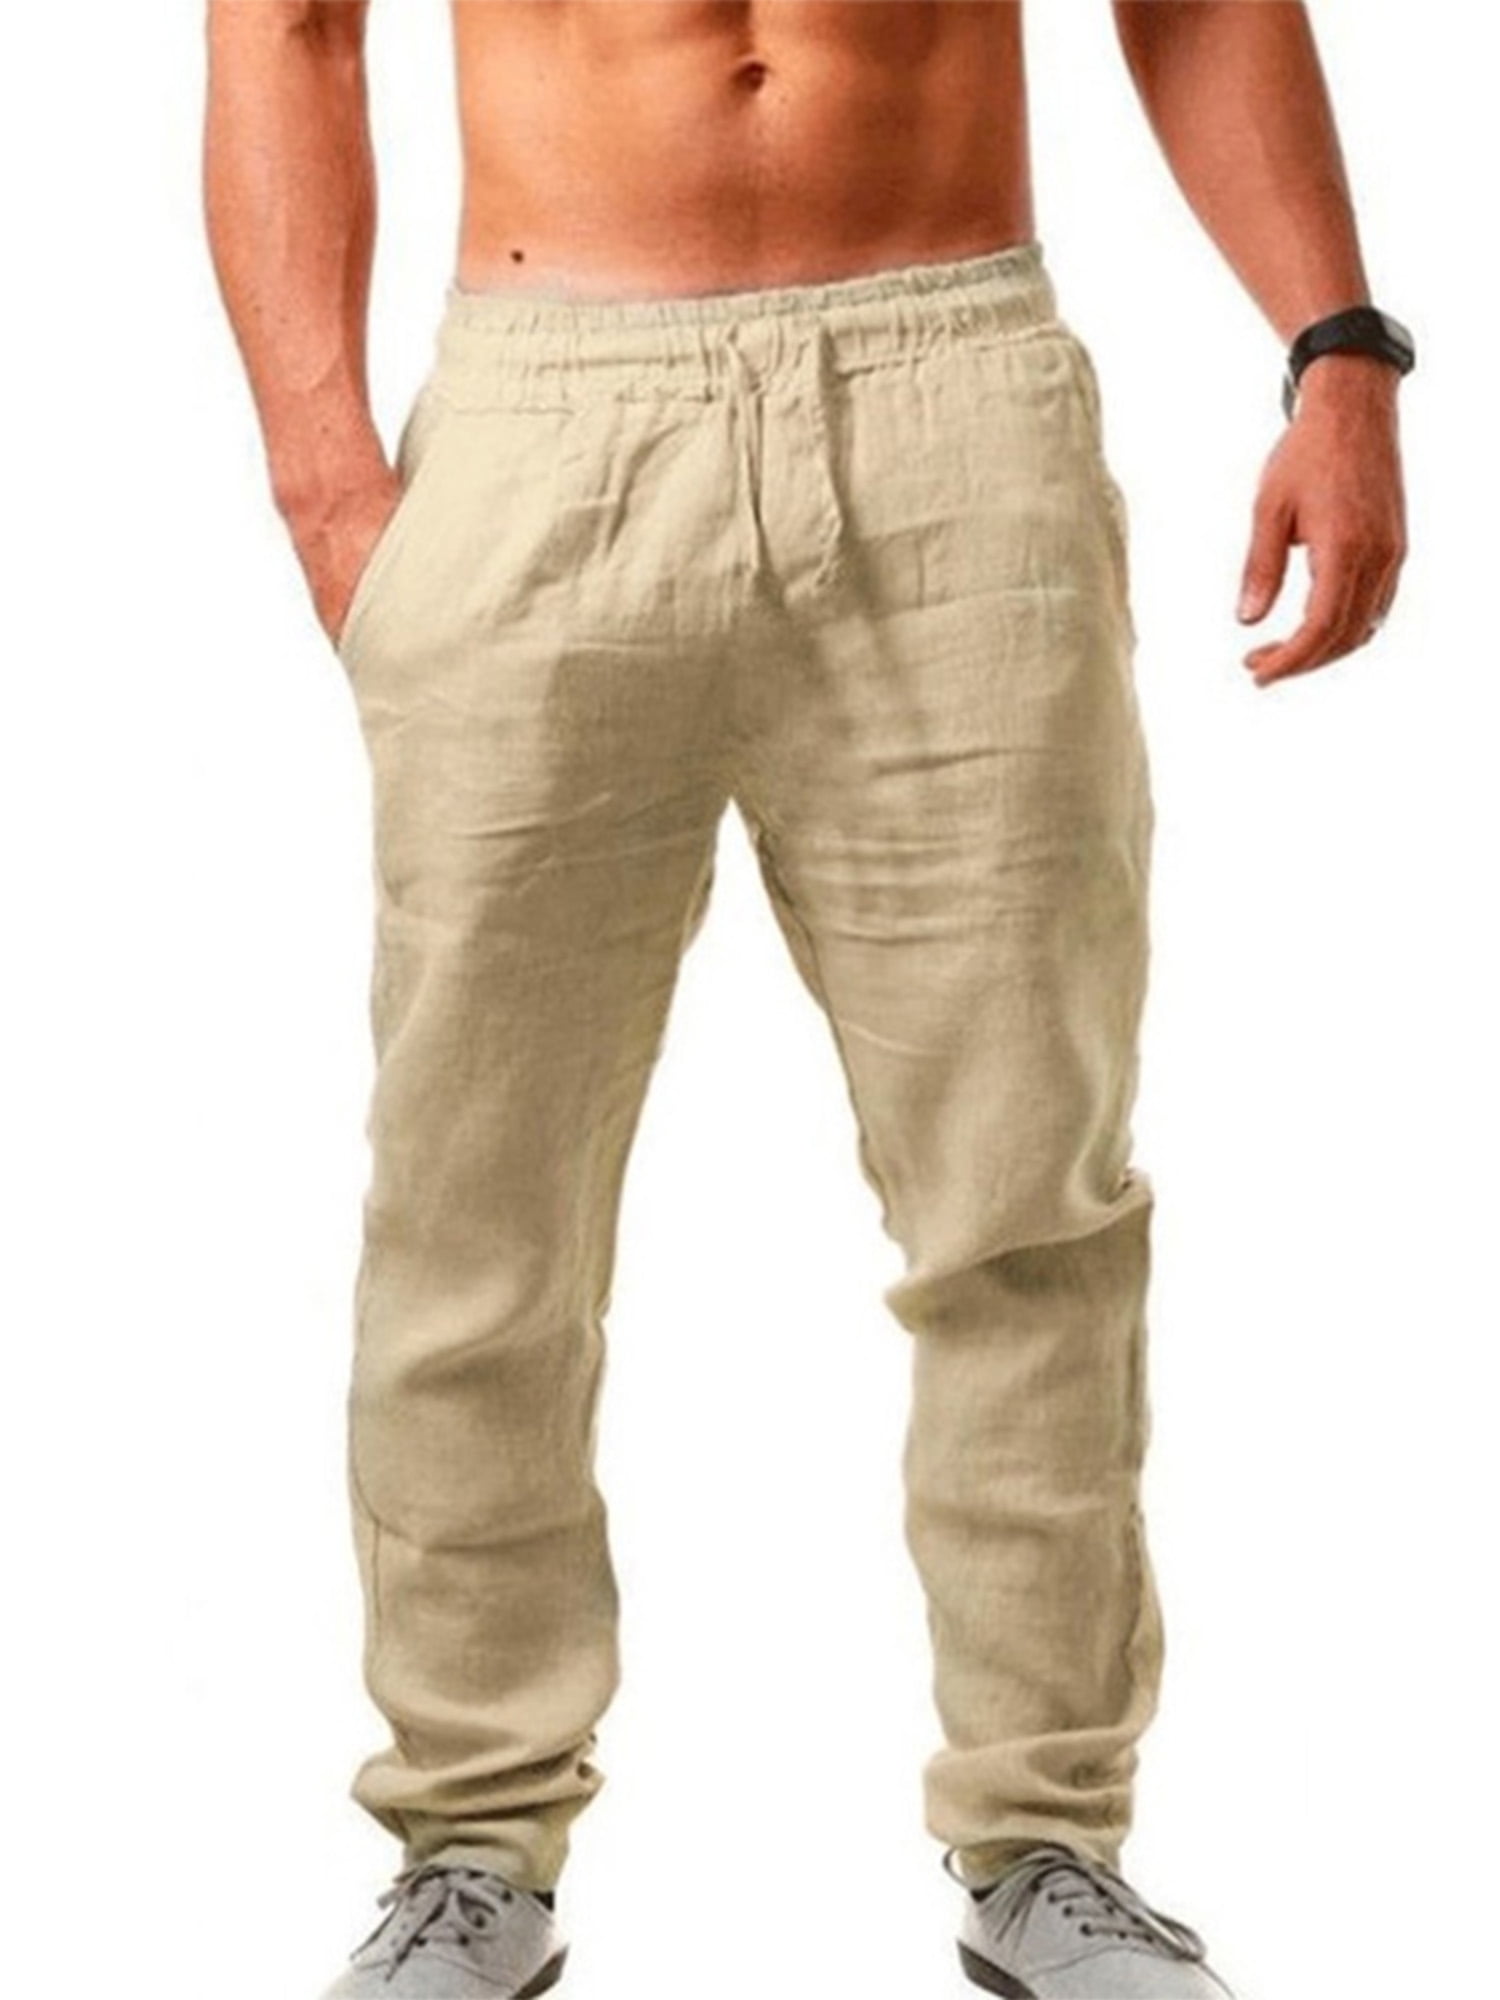 Long Slacks Linen Yoga Casual Mens Drawstring Beach Sport Trousers Loose Pants